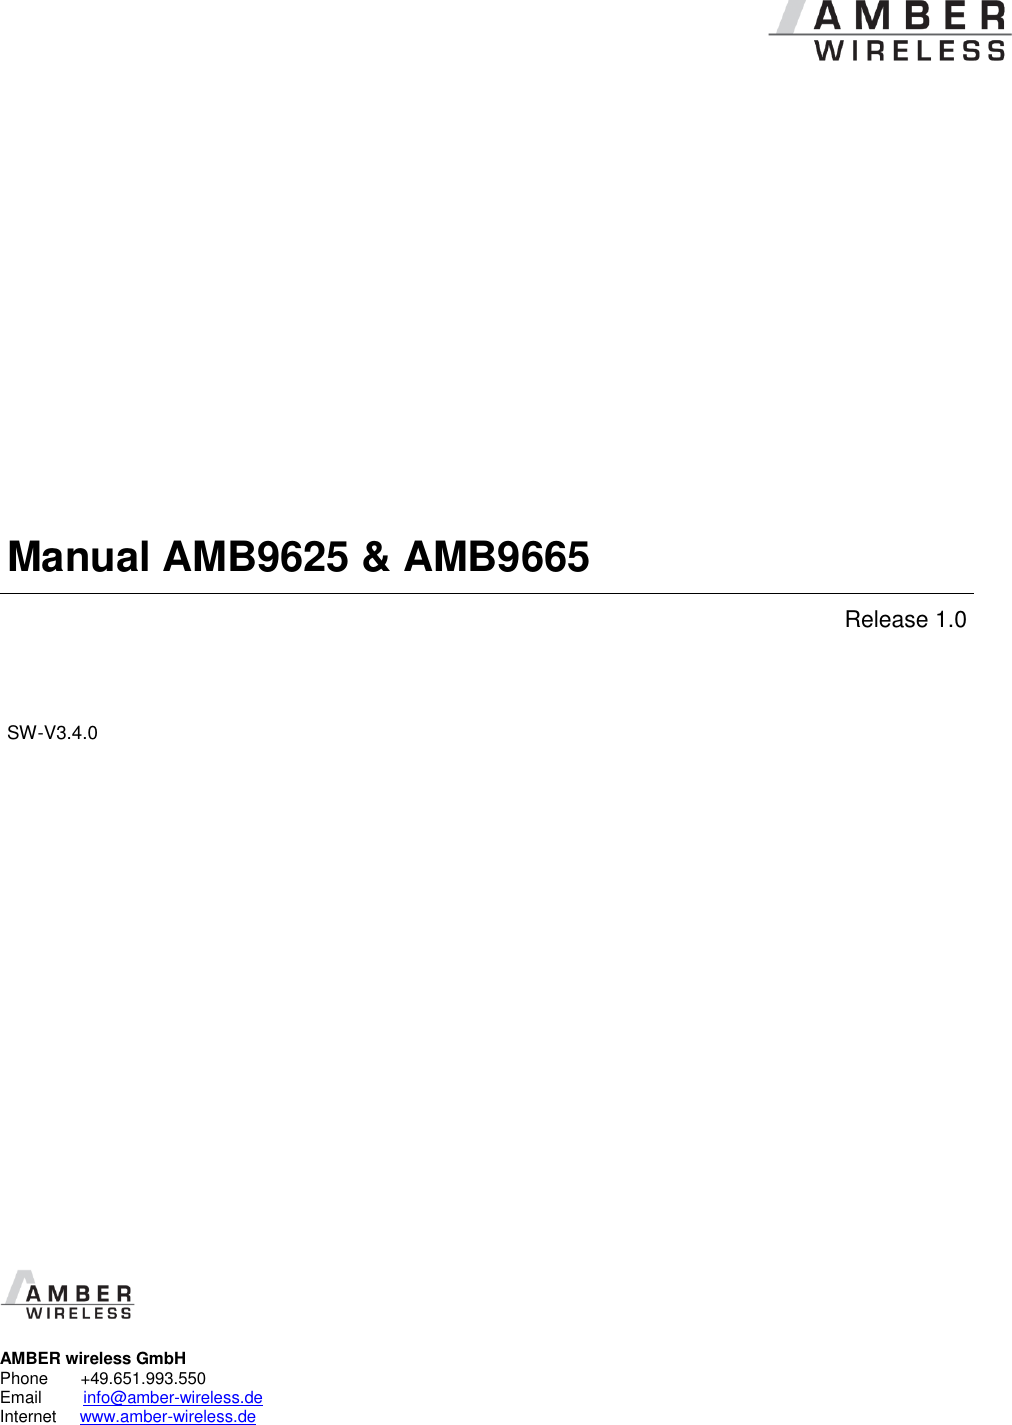            Manual AMB9625 &amp; AMB9665 Release 1.0 SW-V3.4.0                   AMBER wireless GmbH Phone       +49.651.993.550  Email         info@amber-wireless.de Internet     www.amber-wireless.de   